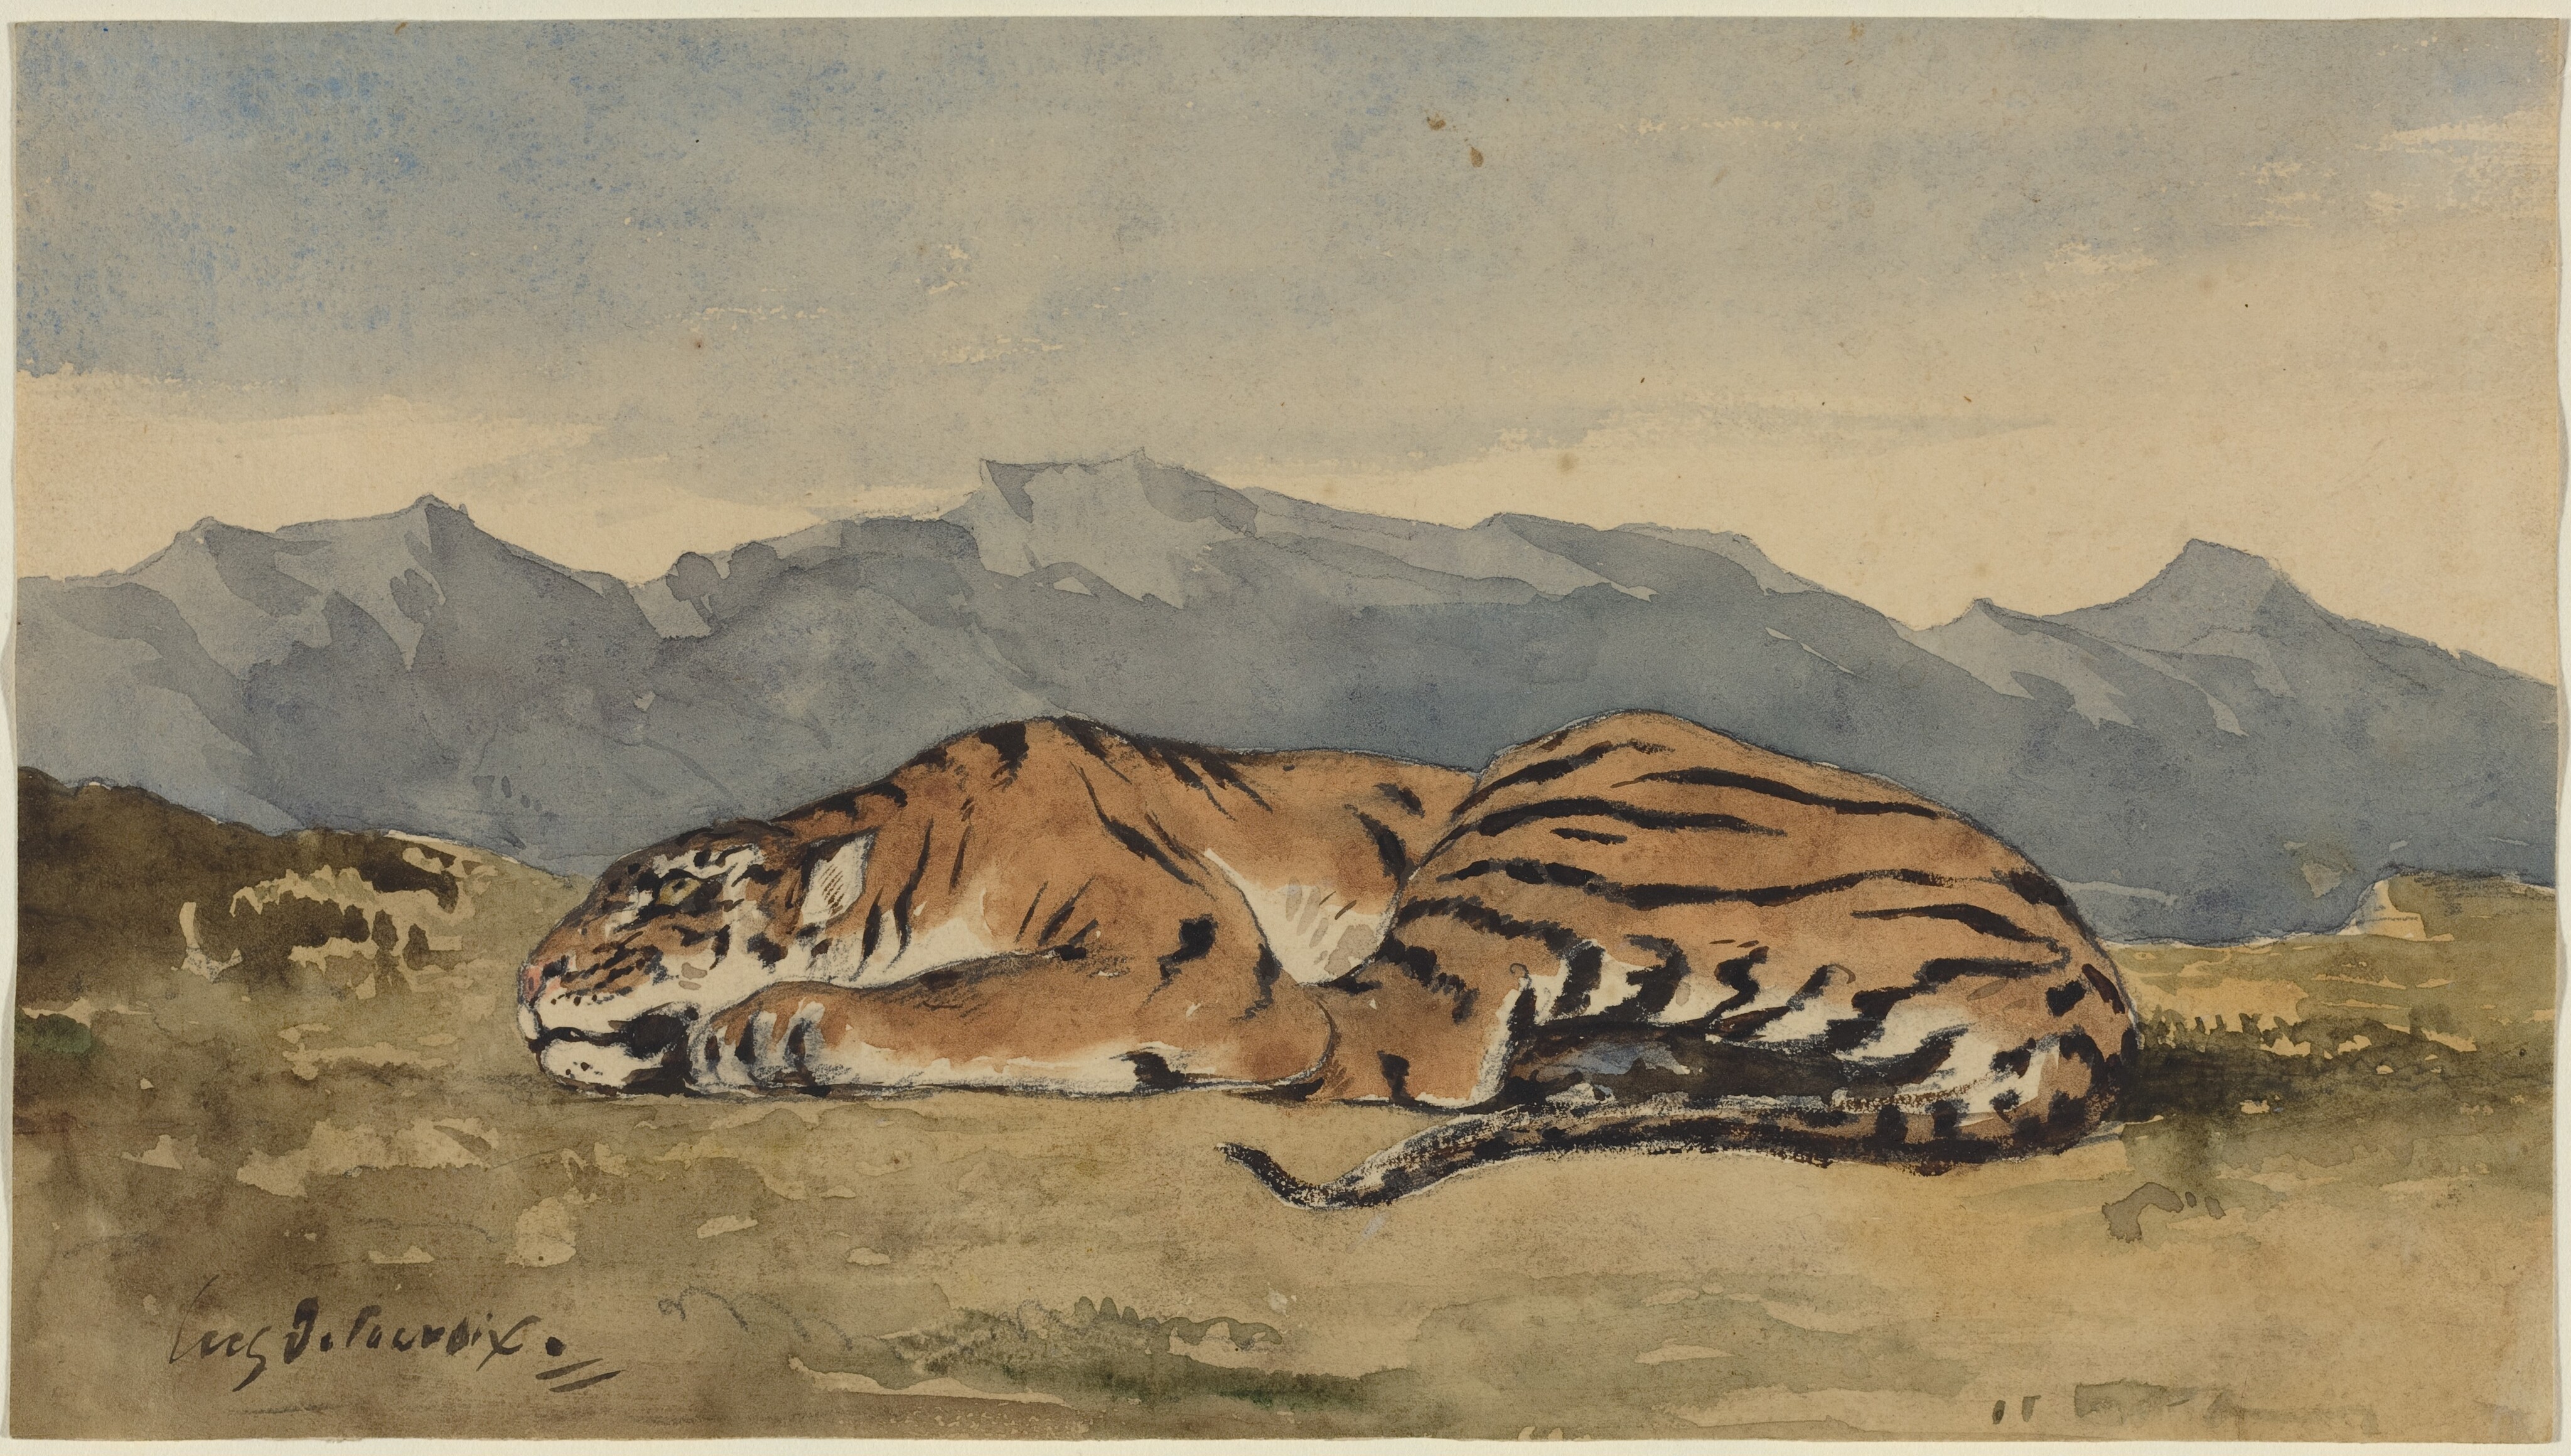 Best Deal for Zakqeik Black and White Painting, Vigilant Tiger